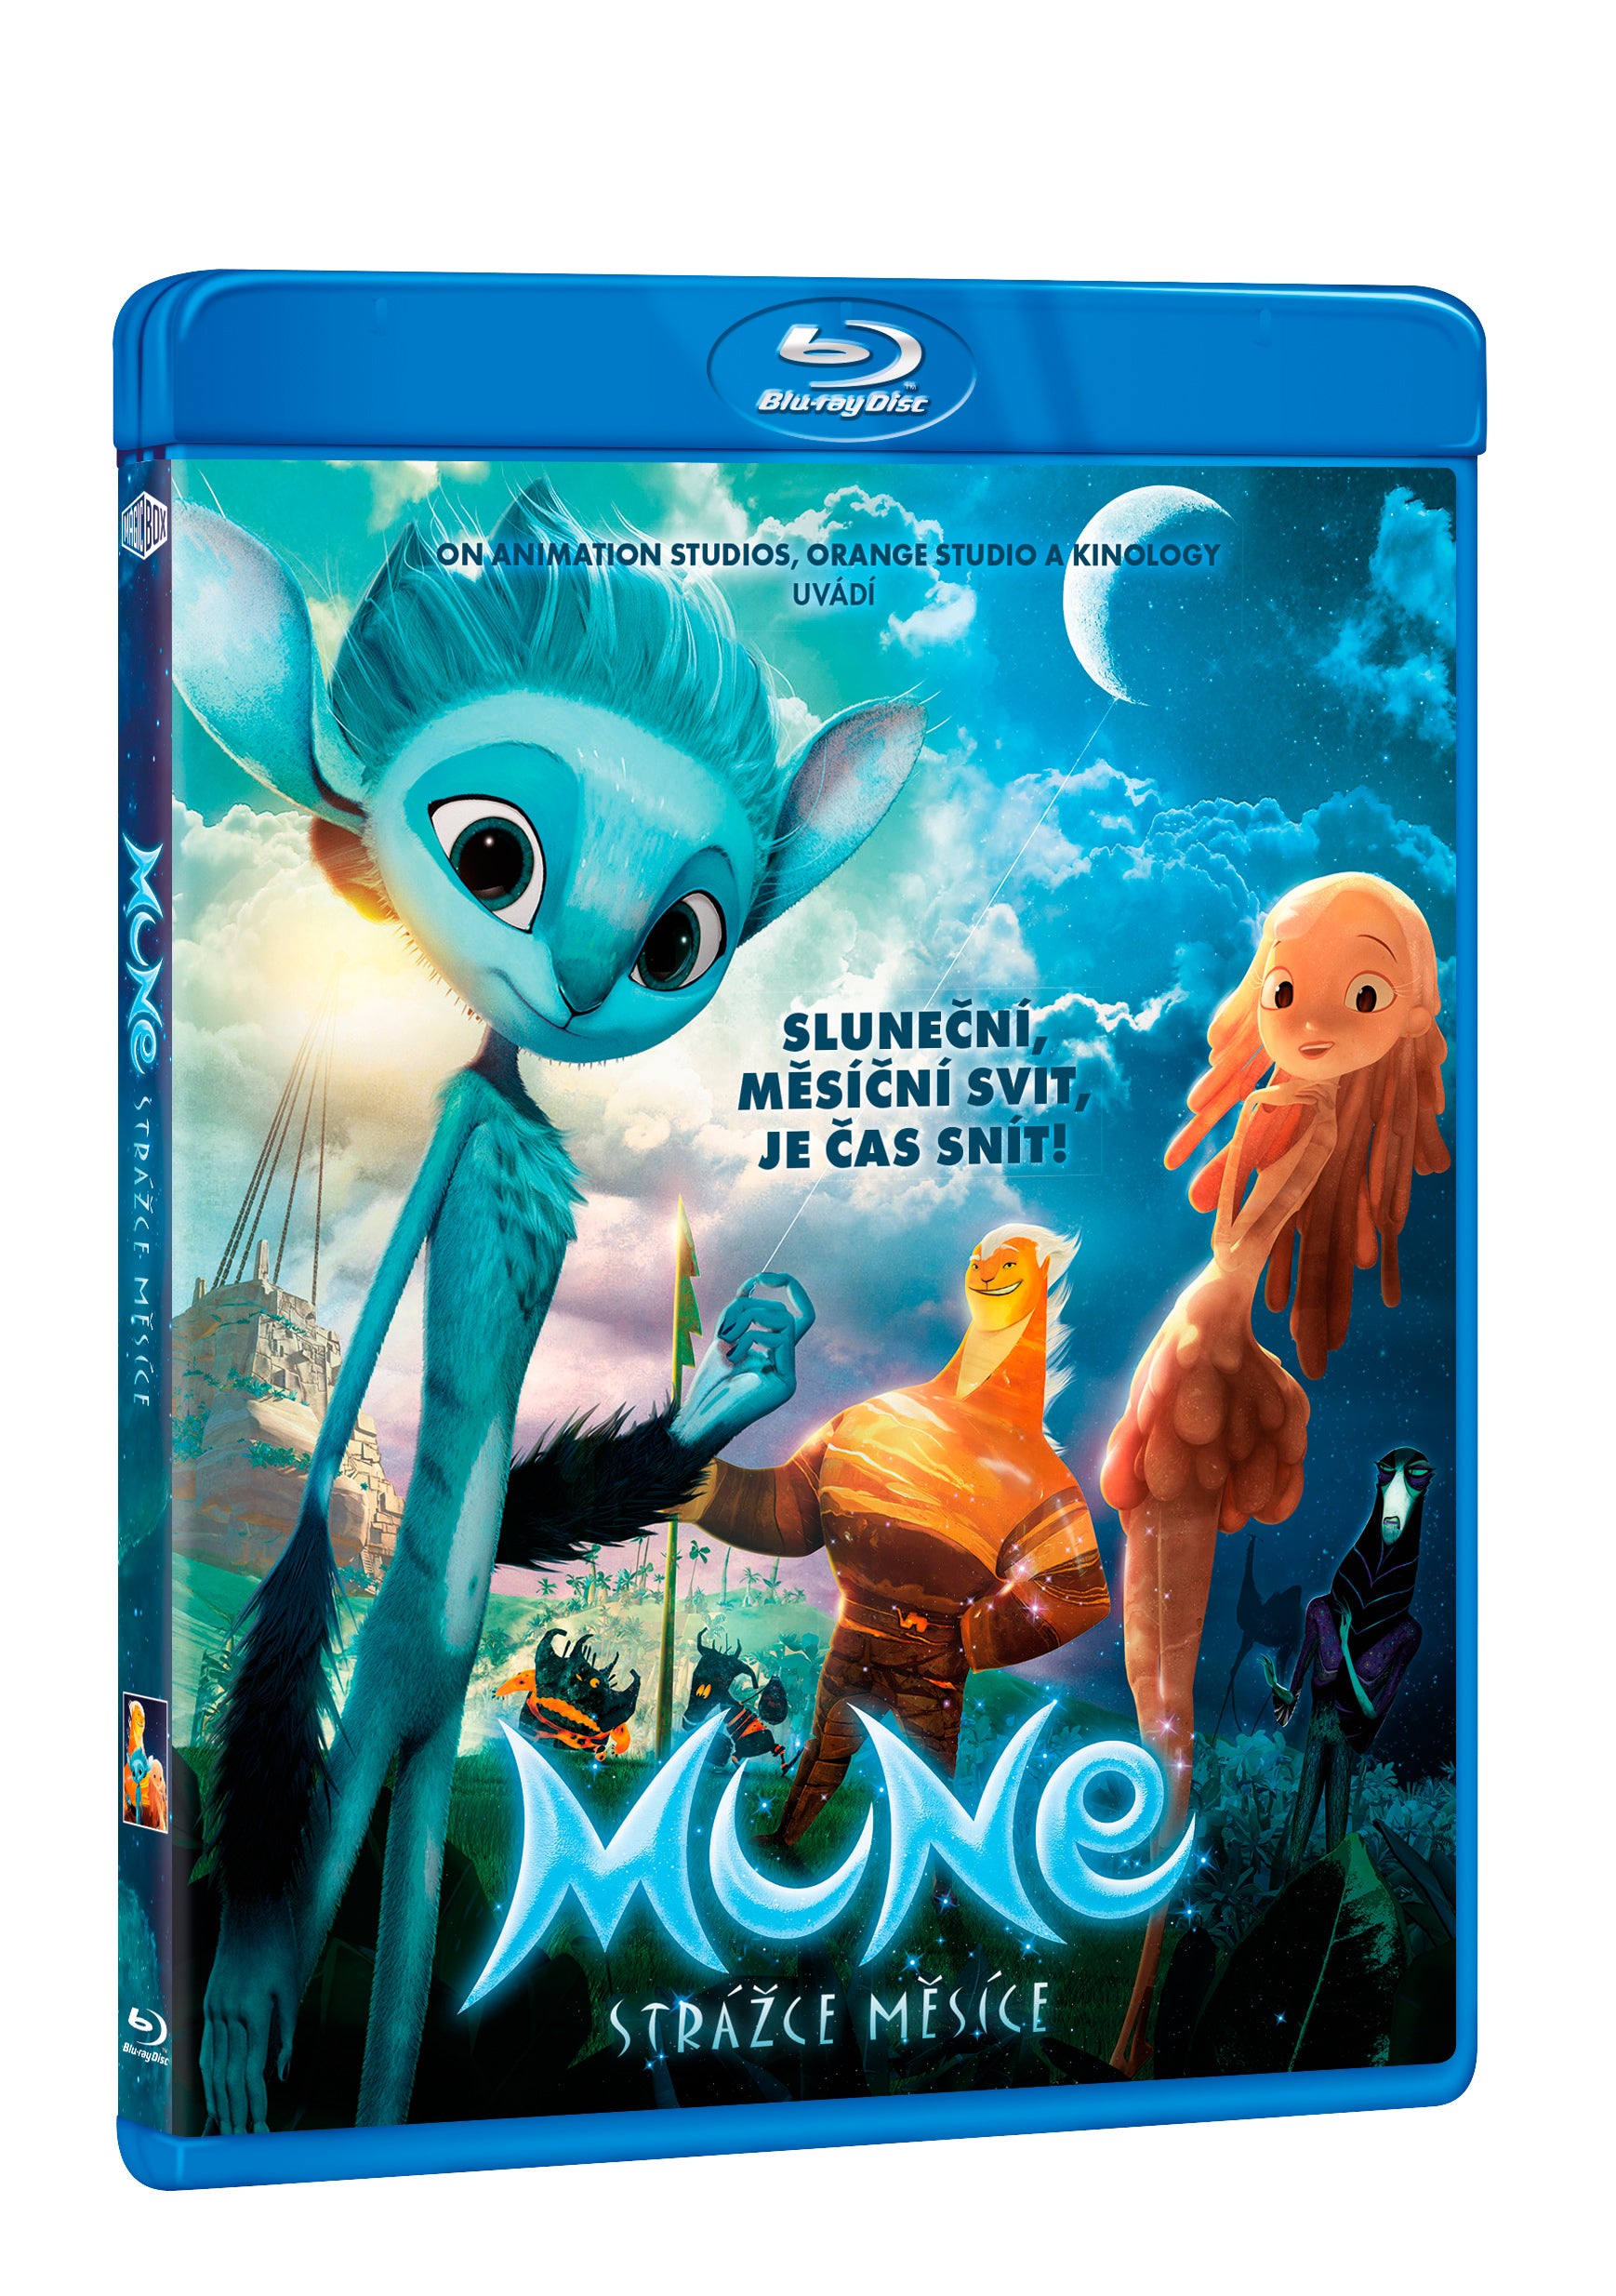 Mune - Strazce Mesice BD / Mune - Czech version